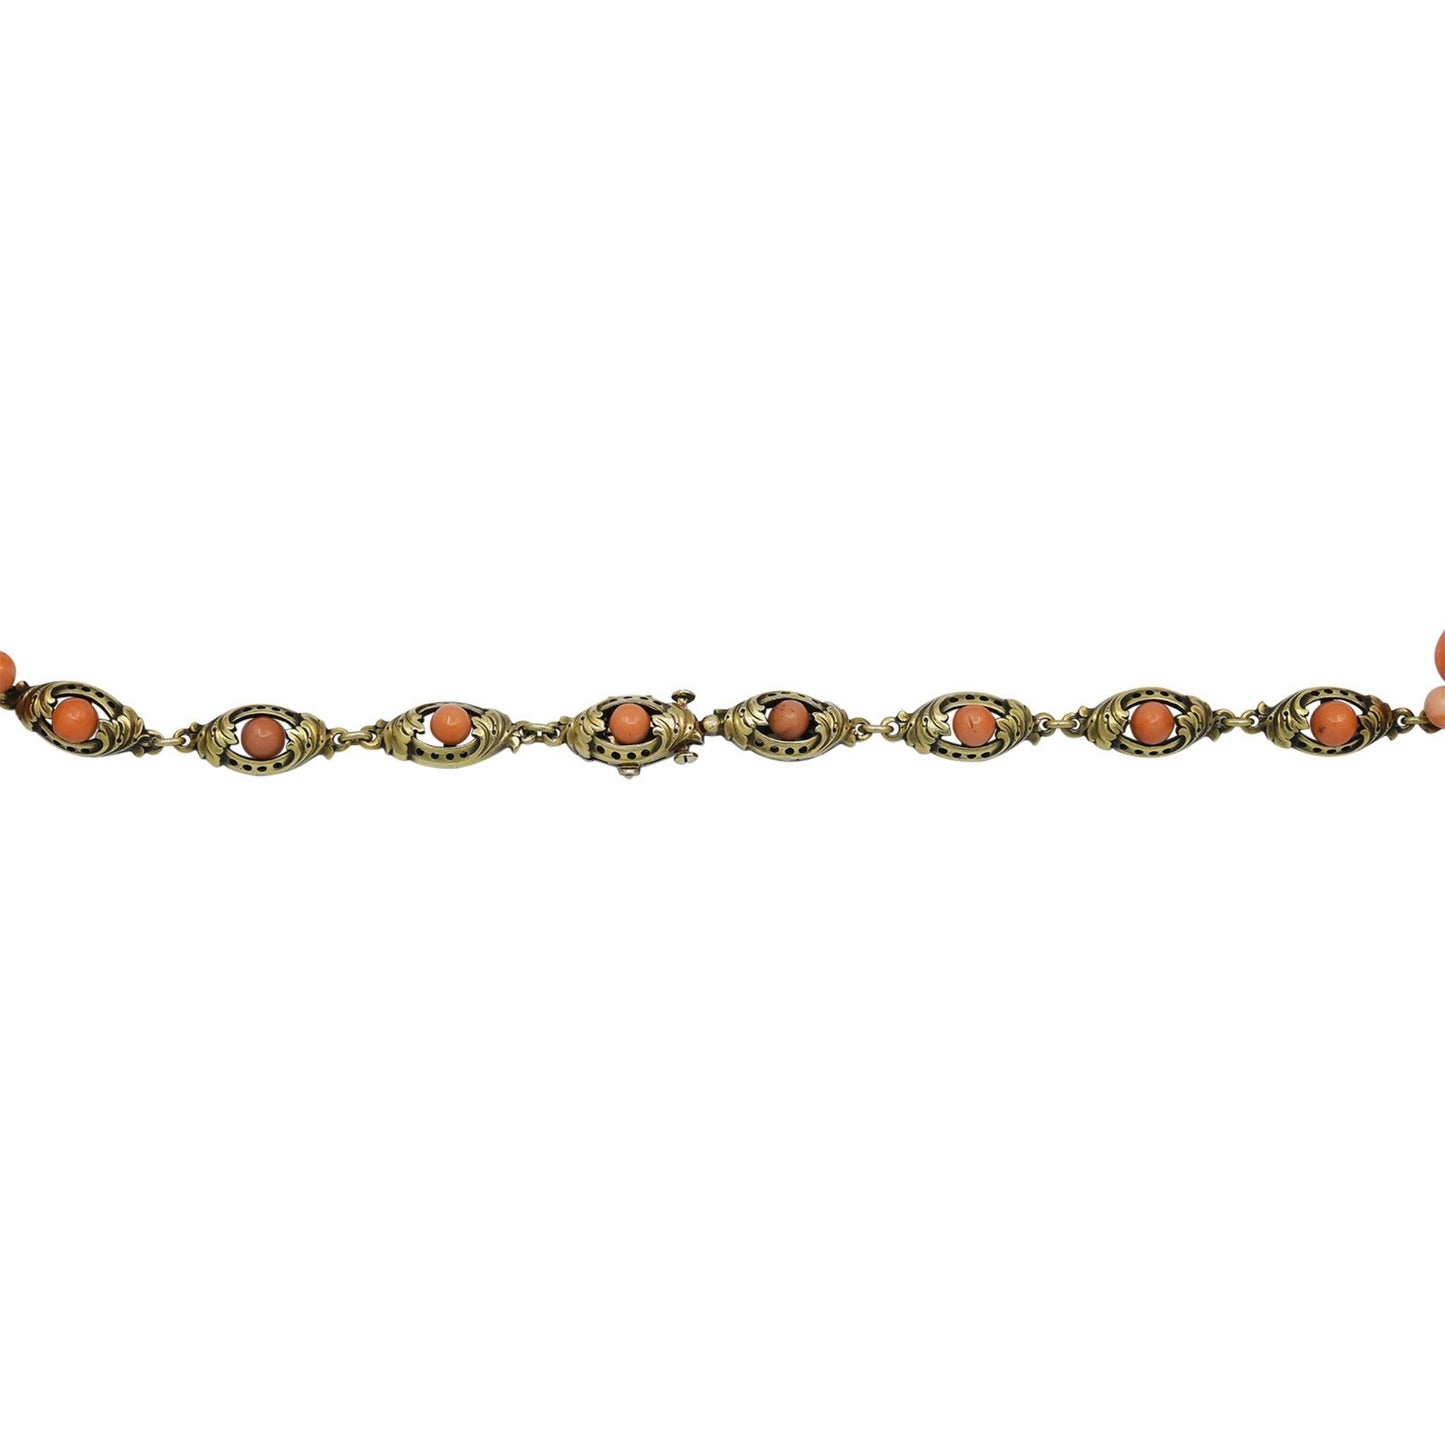 Antique Gold Coral Bead Pendant Necklace